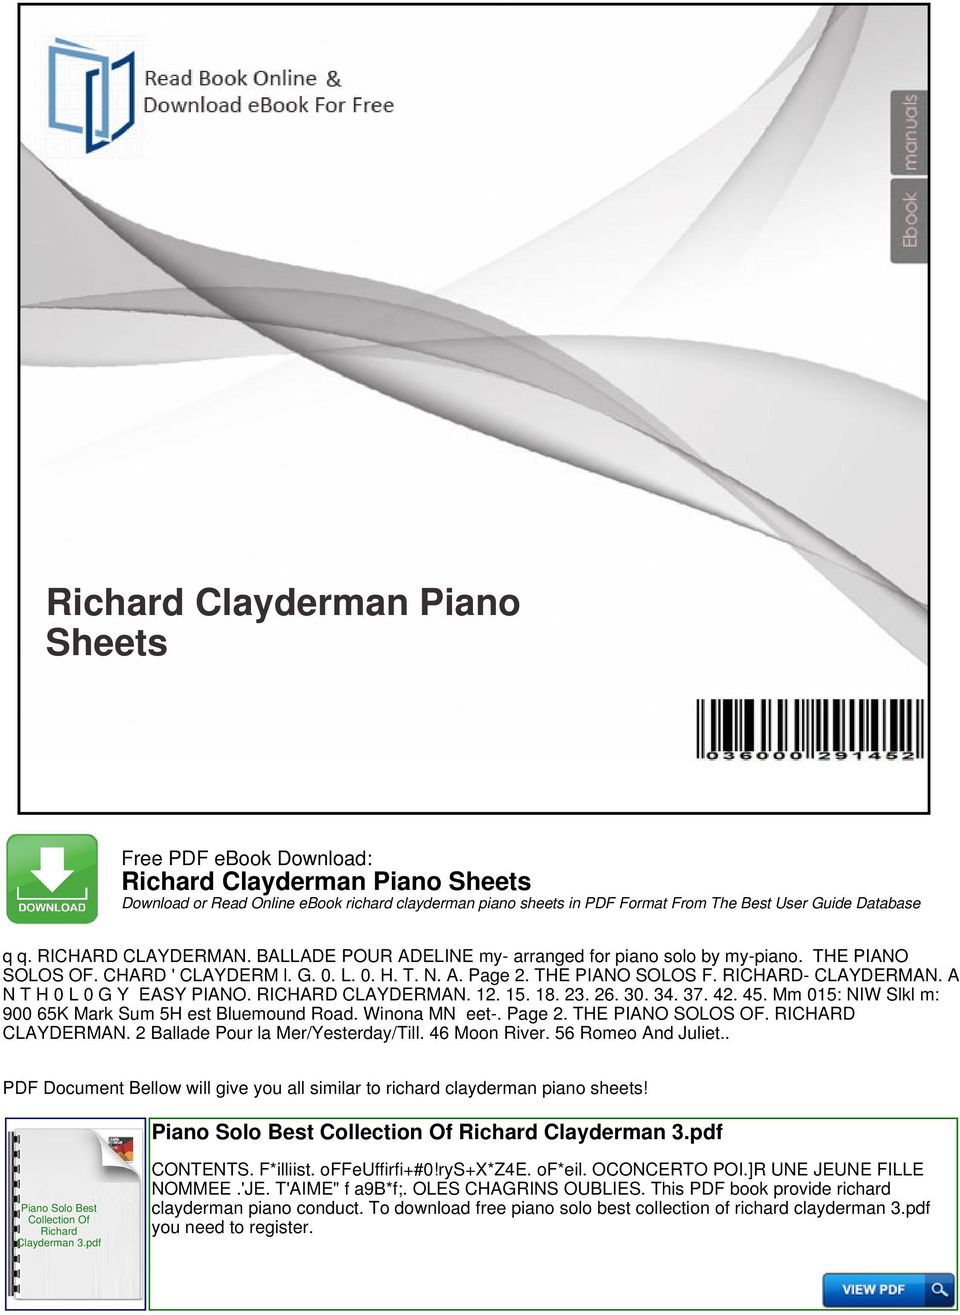 A N T H 0 L 0 G Y EASY PIANO. RICHARD CLAYDERMAN. 12. 15. 18. 23. 26. 30. 34. 37. 42. 45. Mm 015: NIW Slkl m: 900 65K Mark Sum 5H est Bluemound Road. Winona MN eet-. Page 2. THE PIANO SOLOS OF.